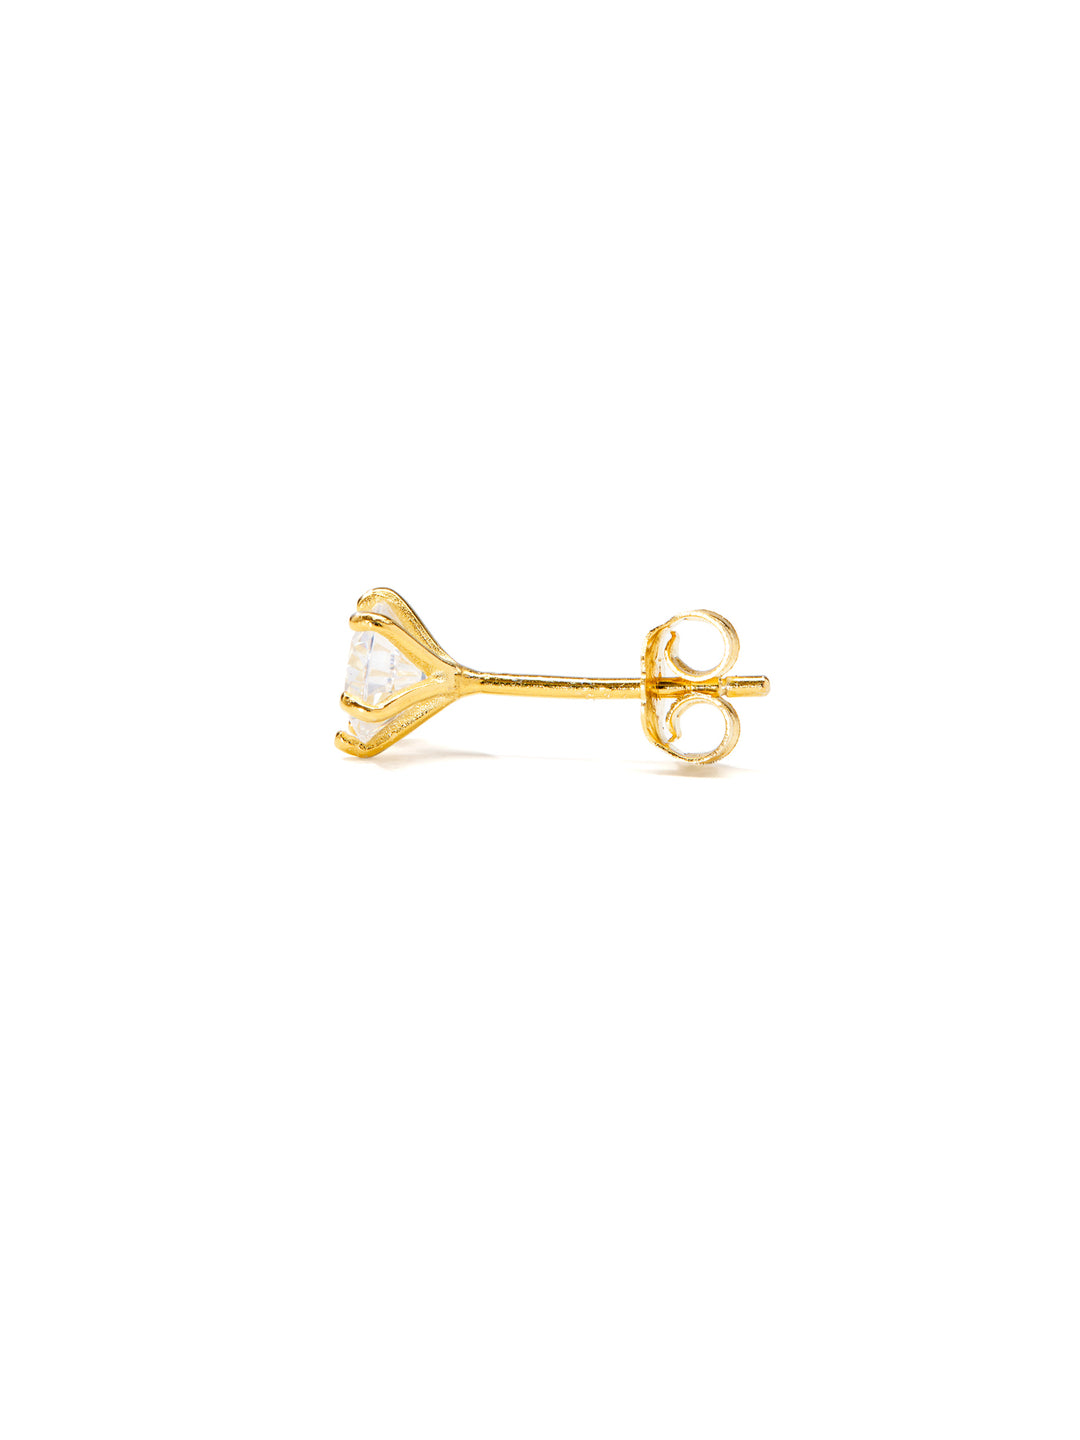 DAINTY - Earrings, Color: 18K Yellow Gold